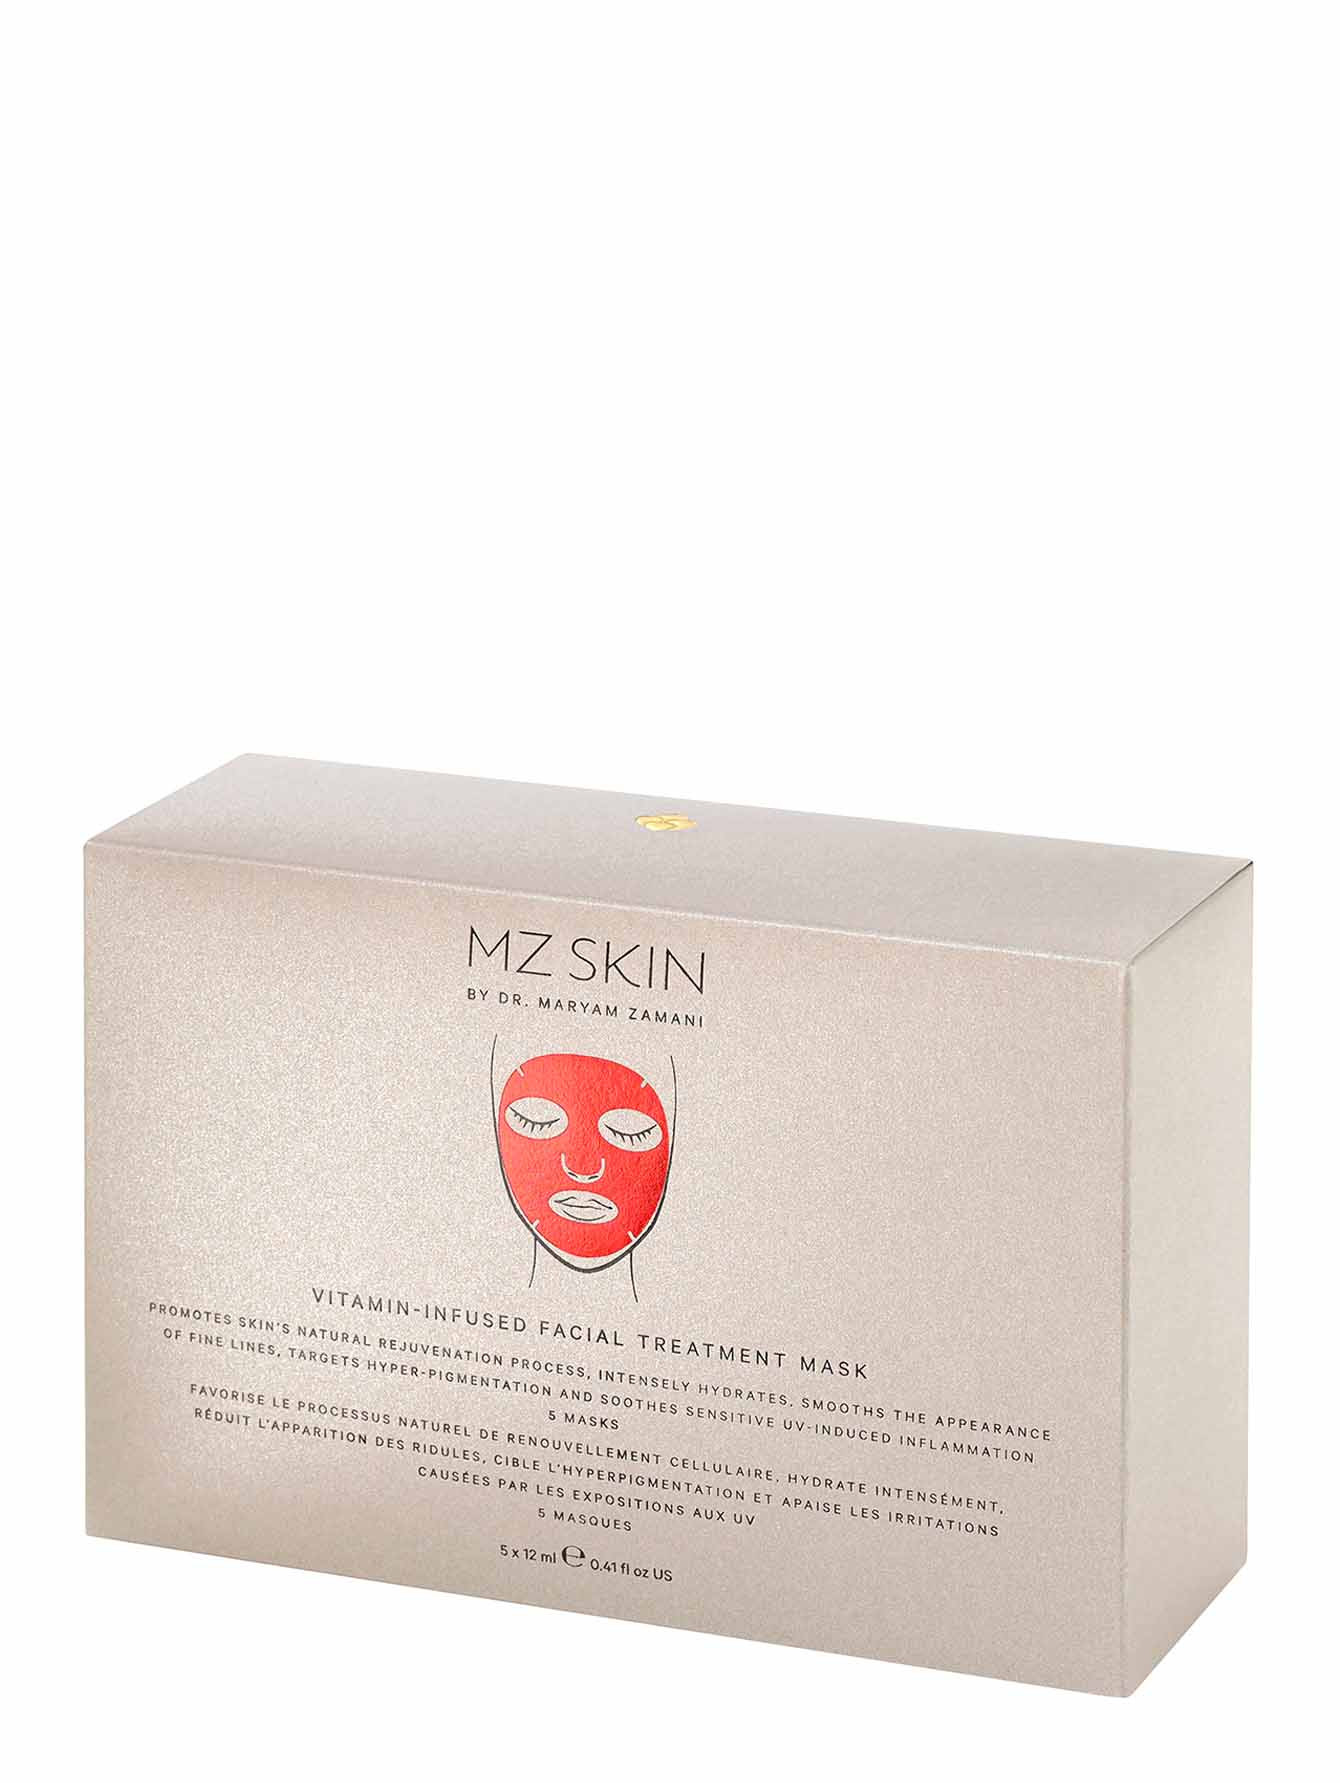 Набор масок для лица Vitamin-Infused Facial Treatment Mask, 5 шт - Обтравка1